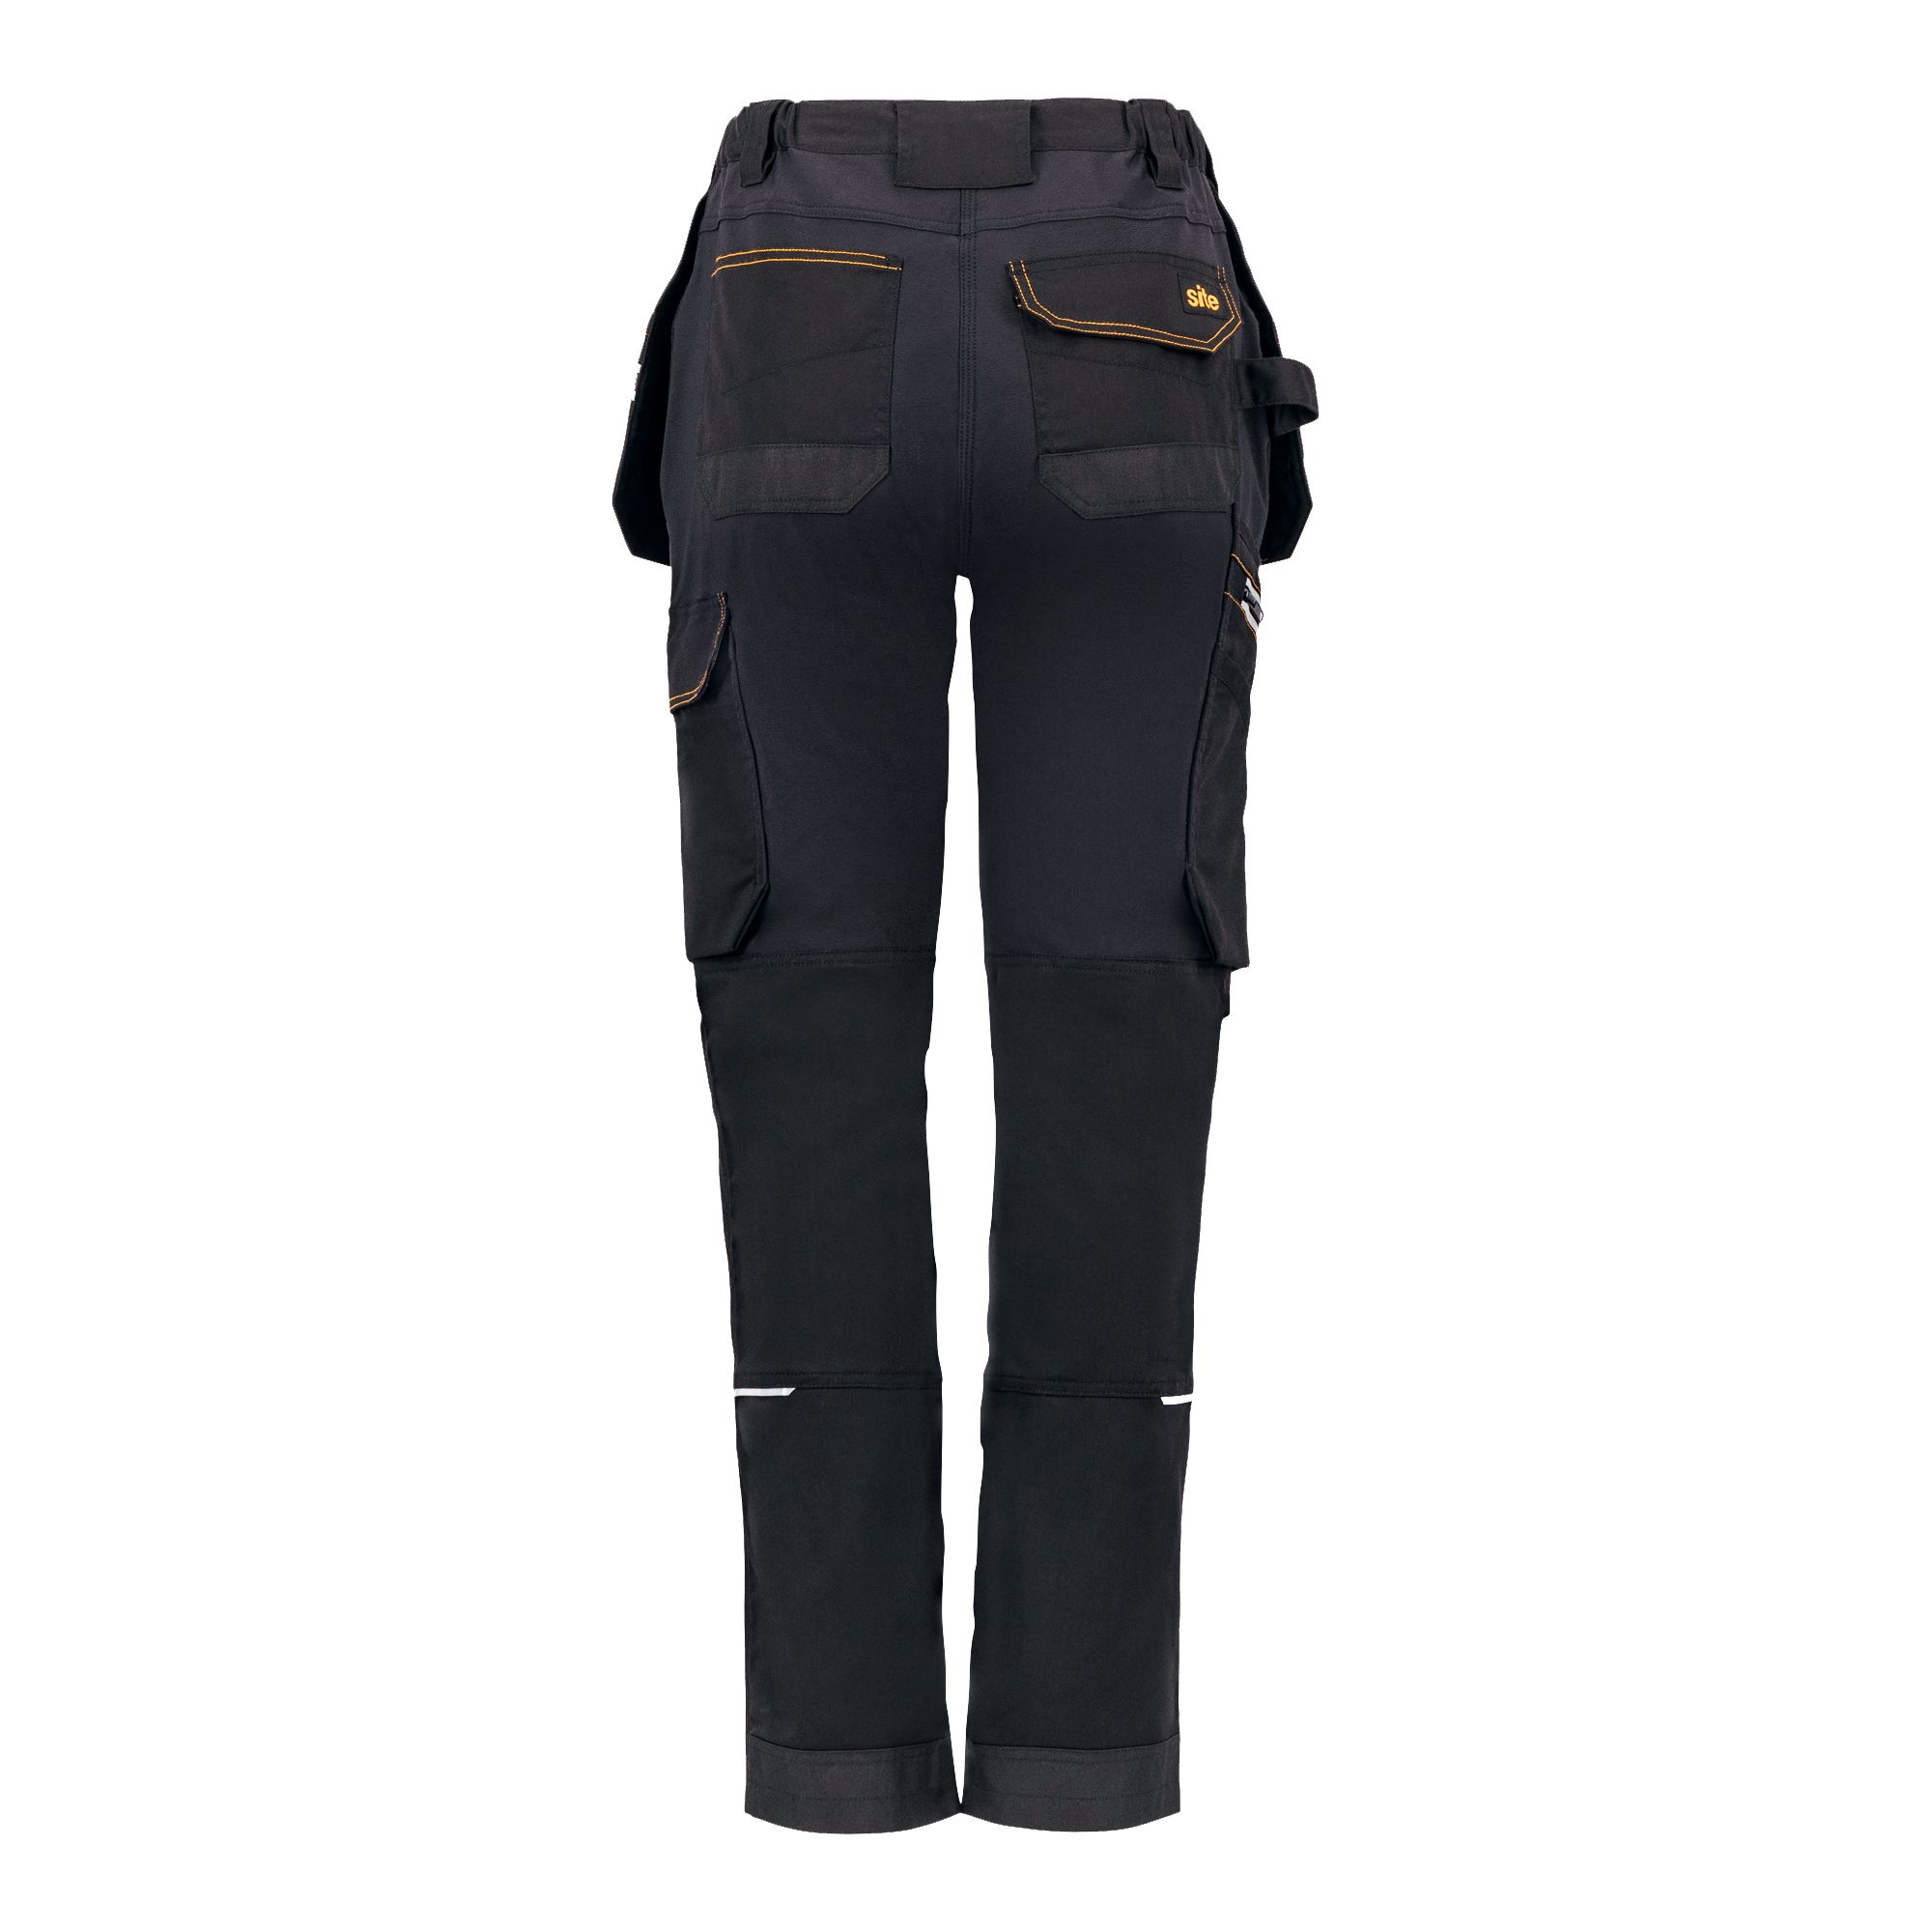 Site Kilani Black/Grey Ladies trousers, Size 6 L31"